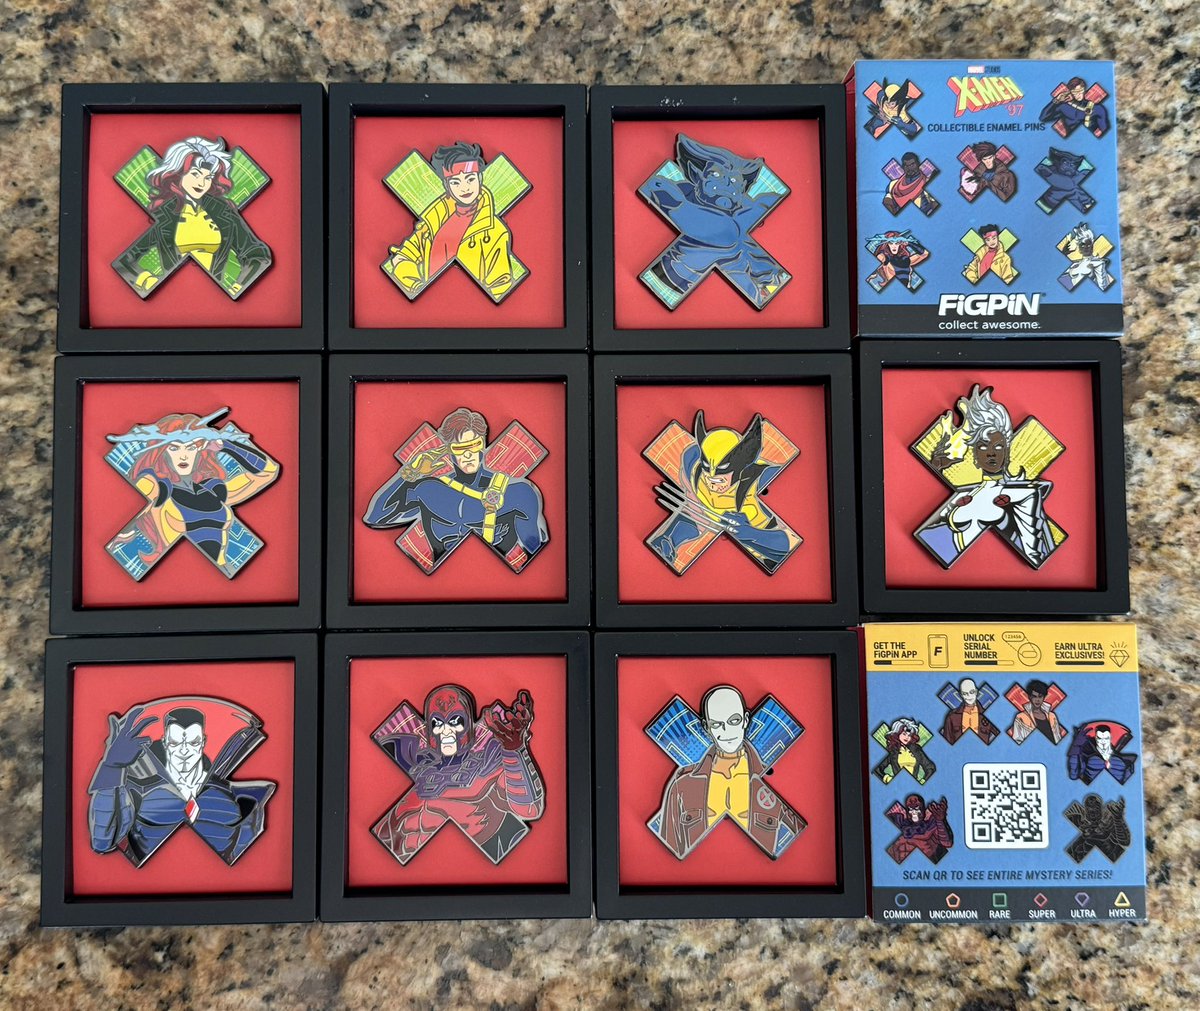 📭📦 Got my X-Men 97 Mini FiGPiNs!
.
#Xmen #Xmen97 #Marvel #MarvelPins #Pin #Pins #DisneyPins #DisneyPinTrading #Collectibles #Collector #FiGPiN #FiGPiNs #DisTrackers